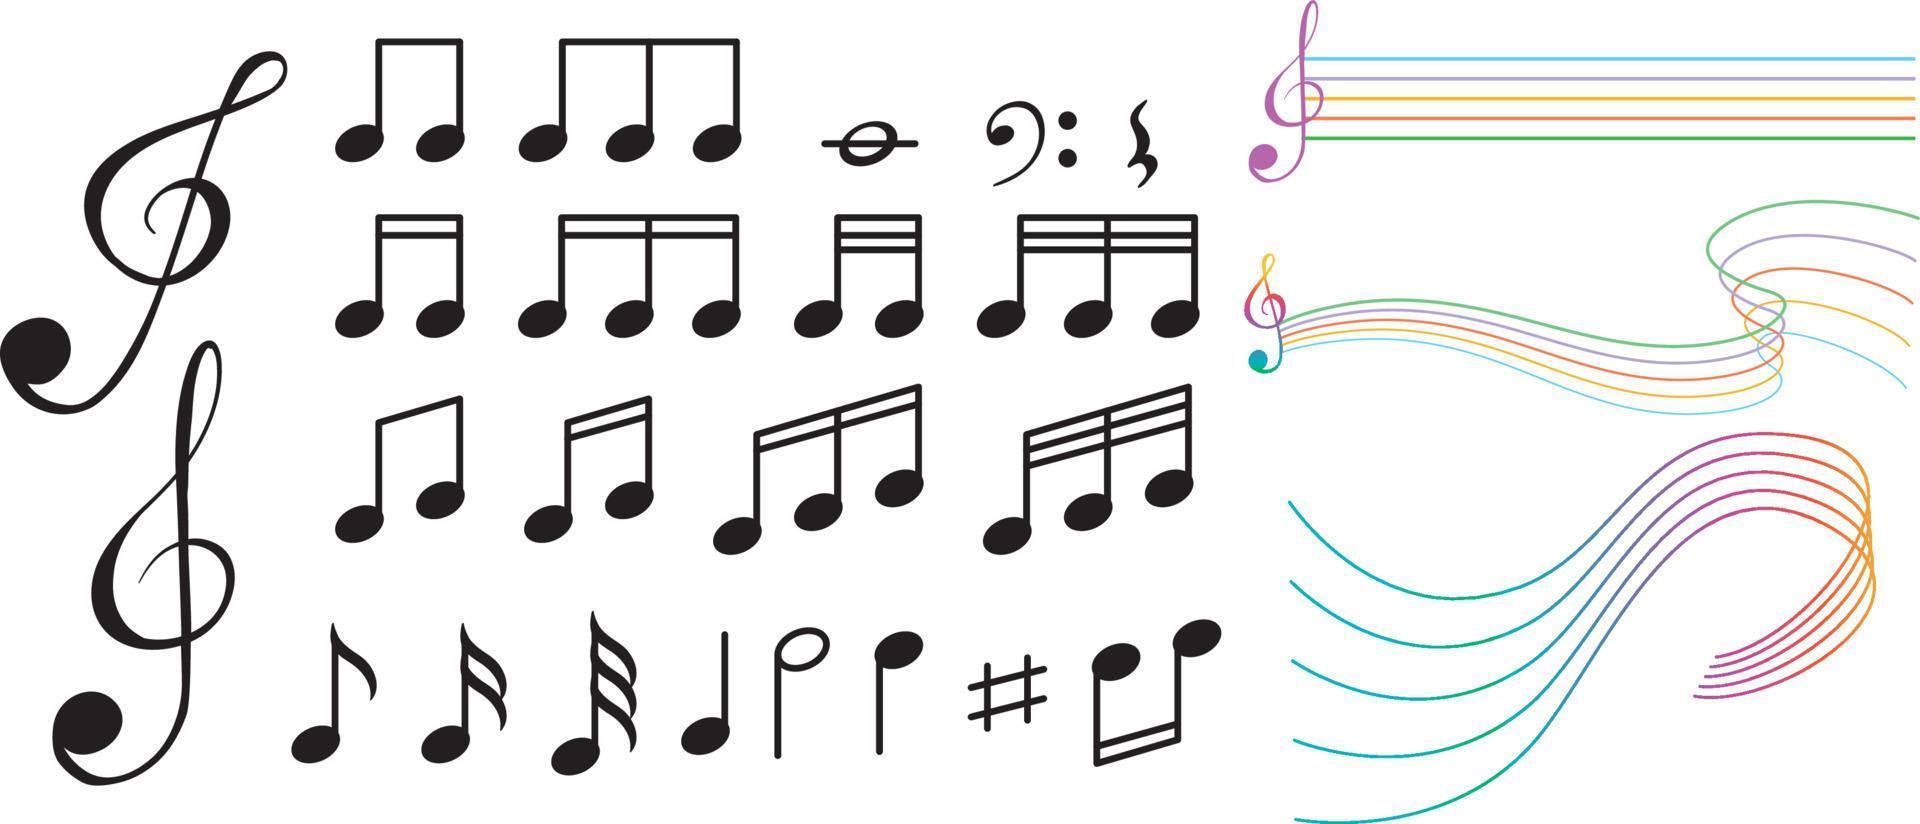 Símbolos musicales con líneas onduladas sobre fondo blanco. vector